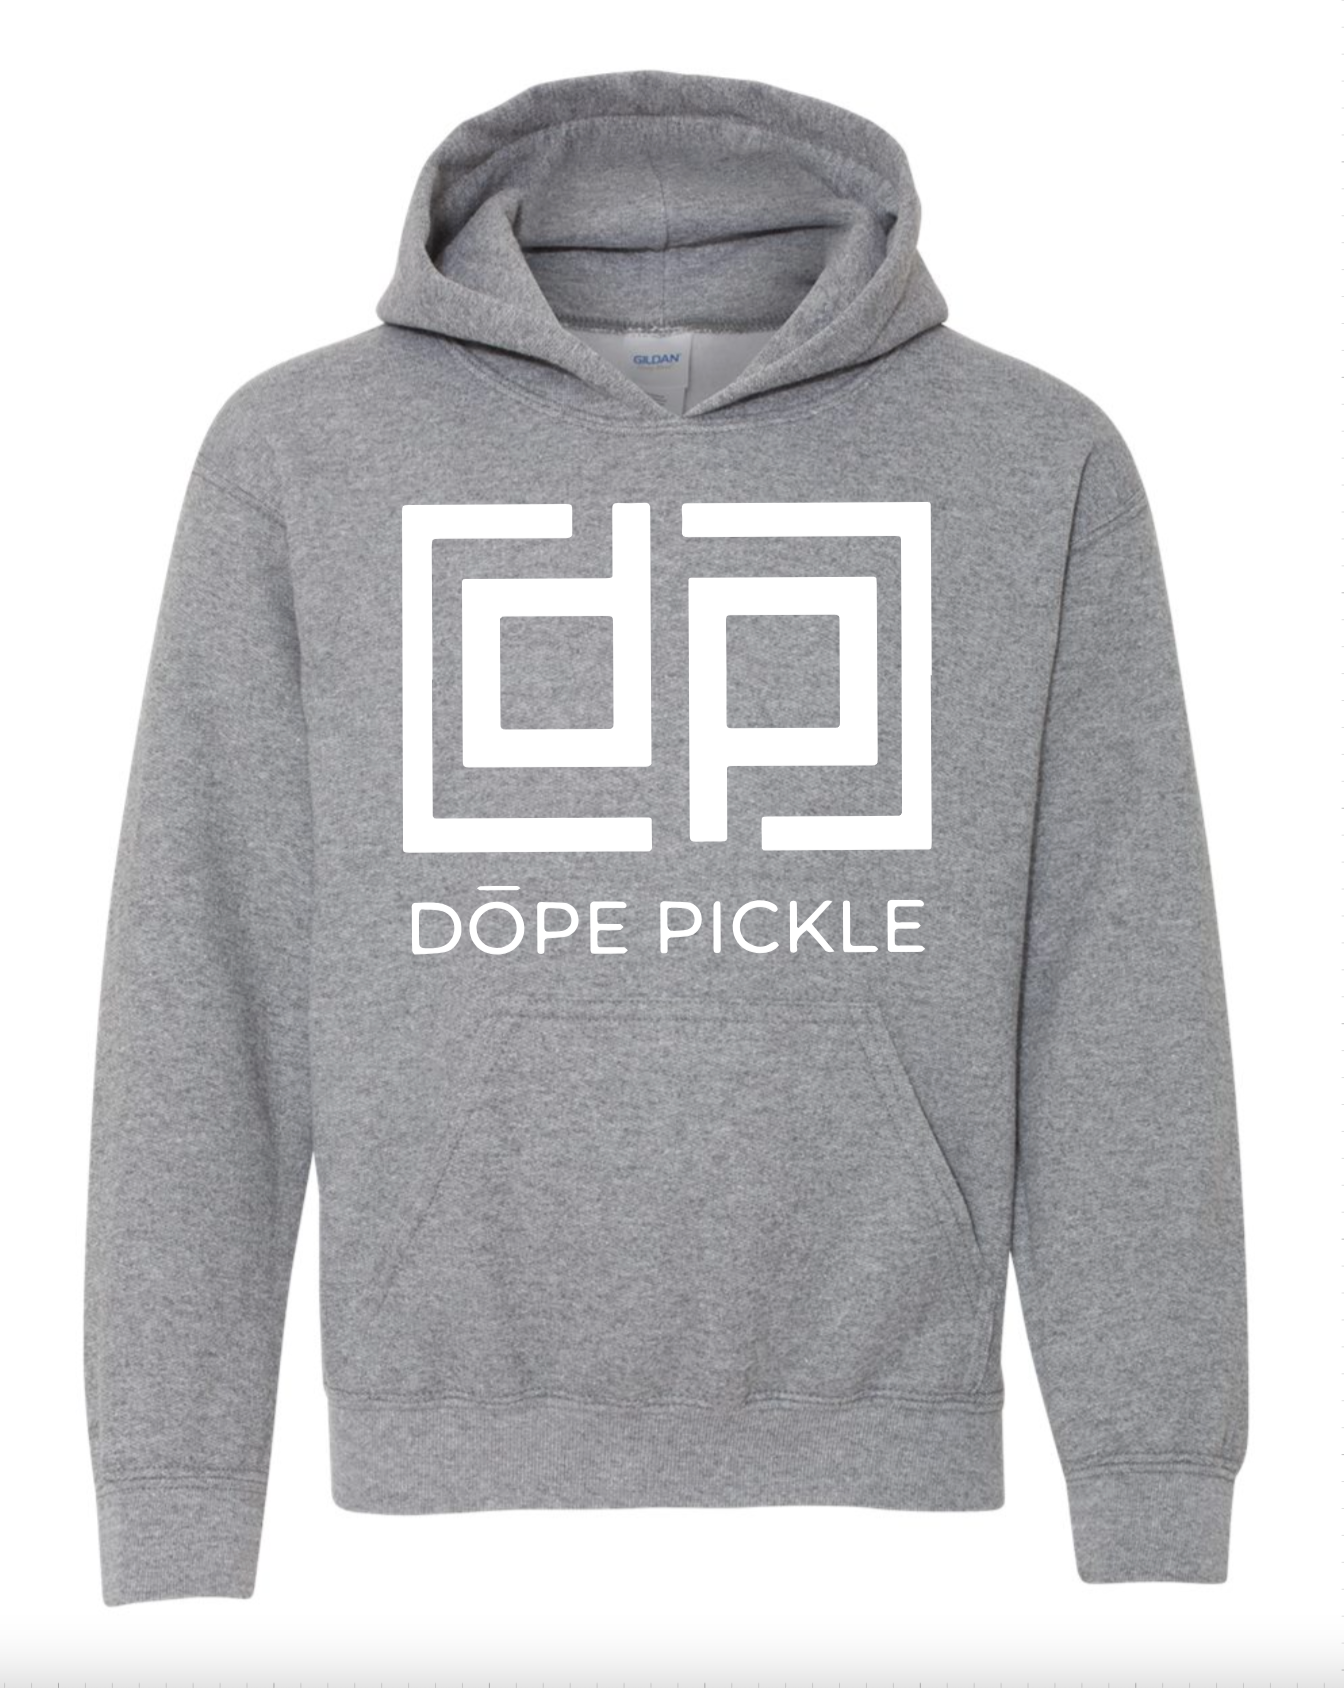 Dope Pickle YOUTH Hoodies